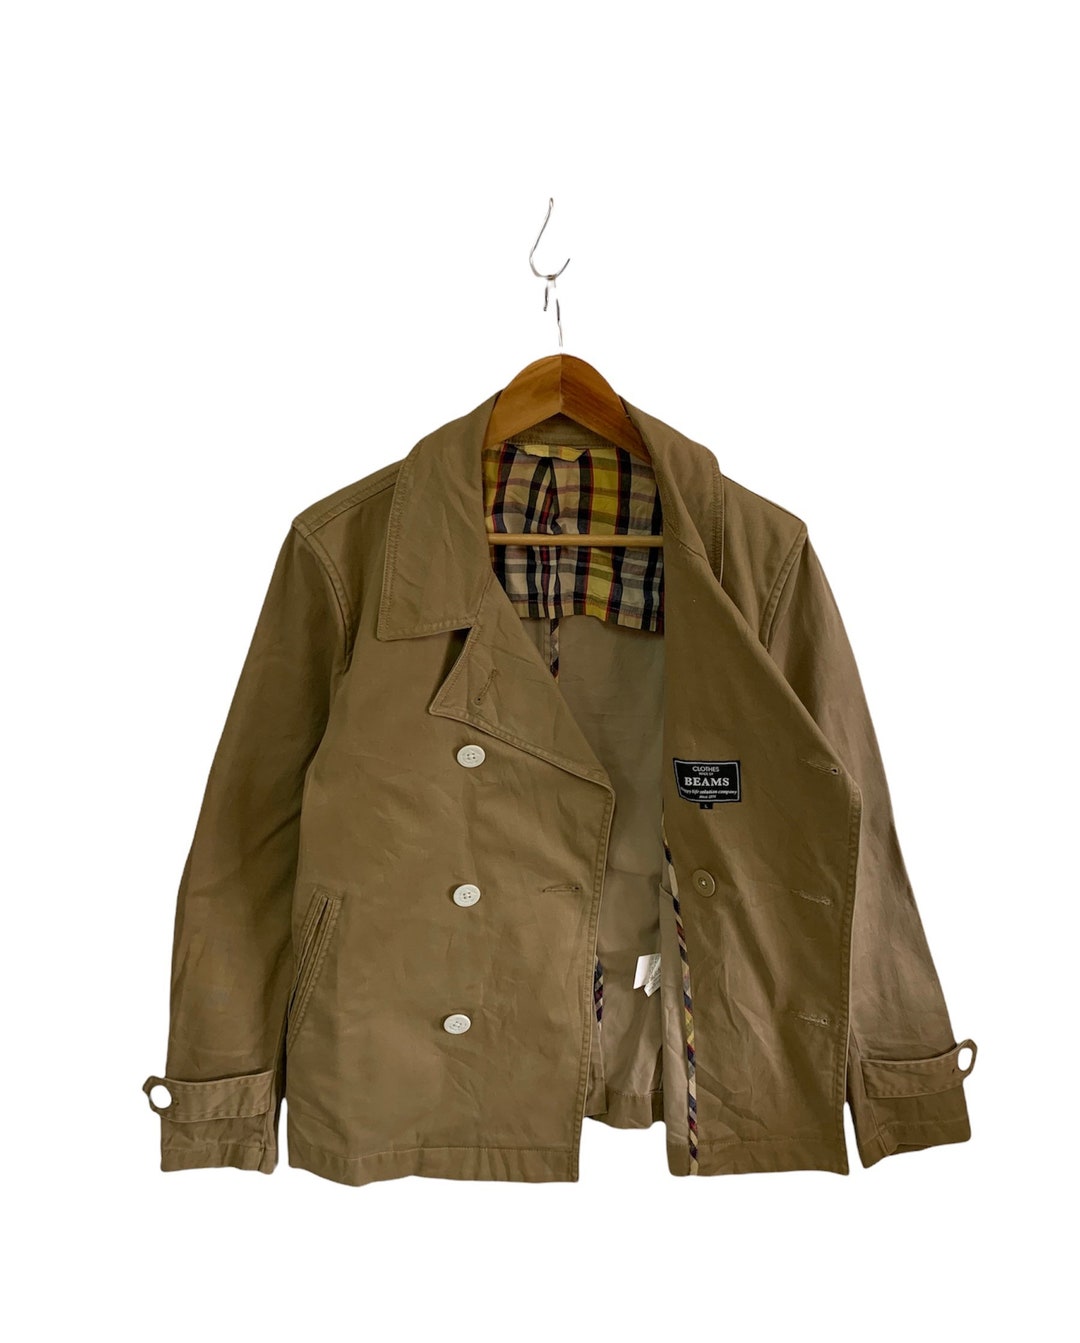 Vintage 90s Beams Jacket Blazzer Rare Design Japanese Brand - Etsy